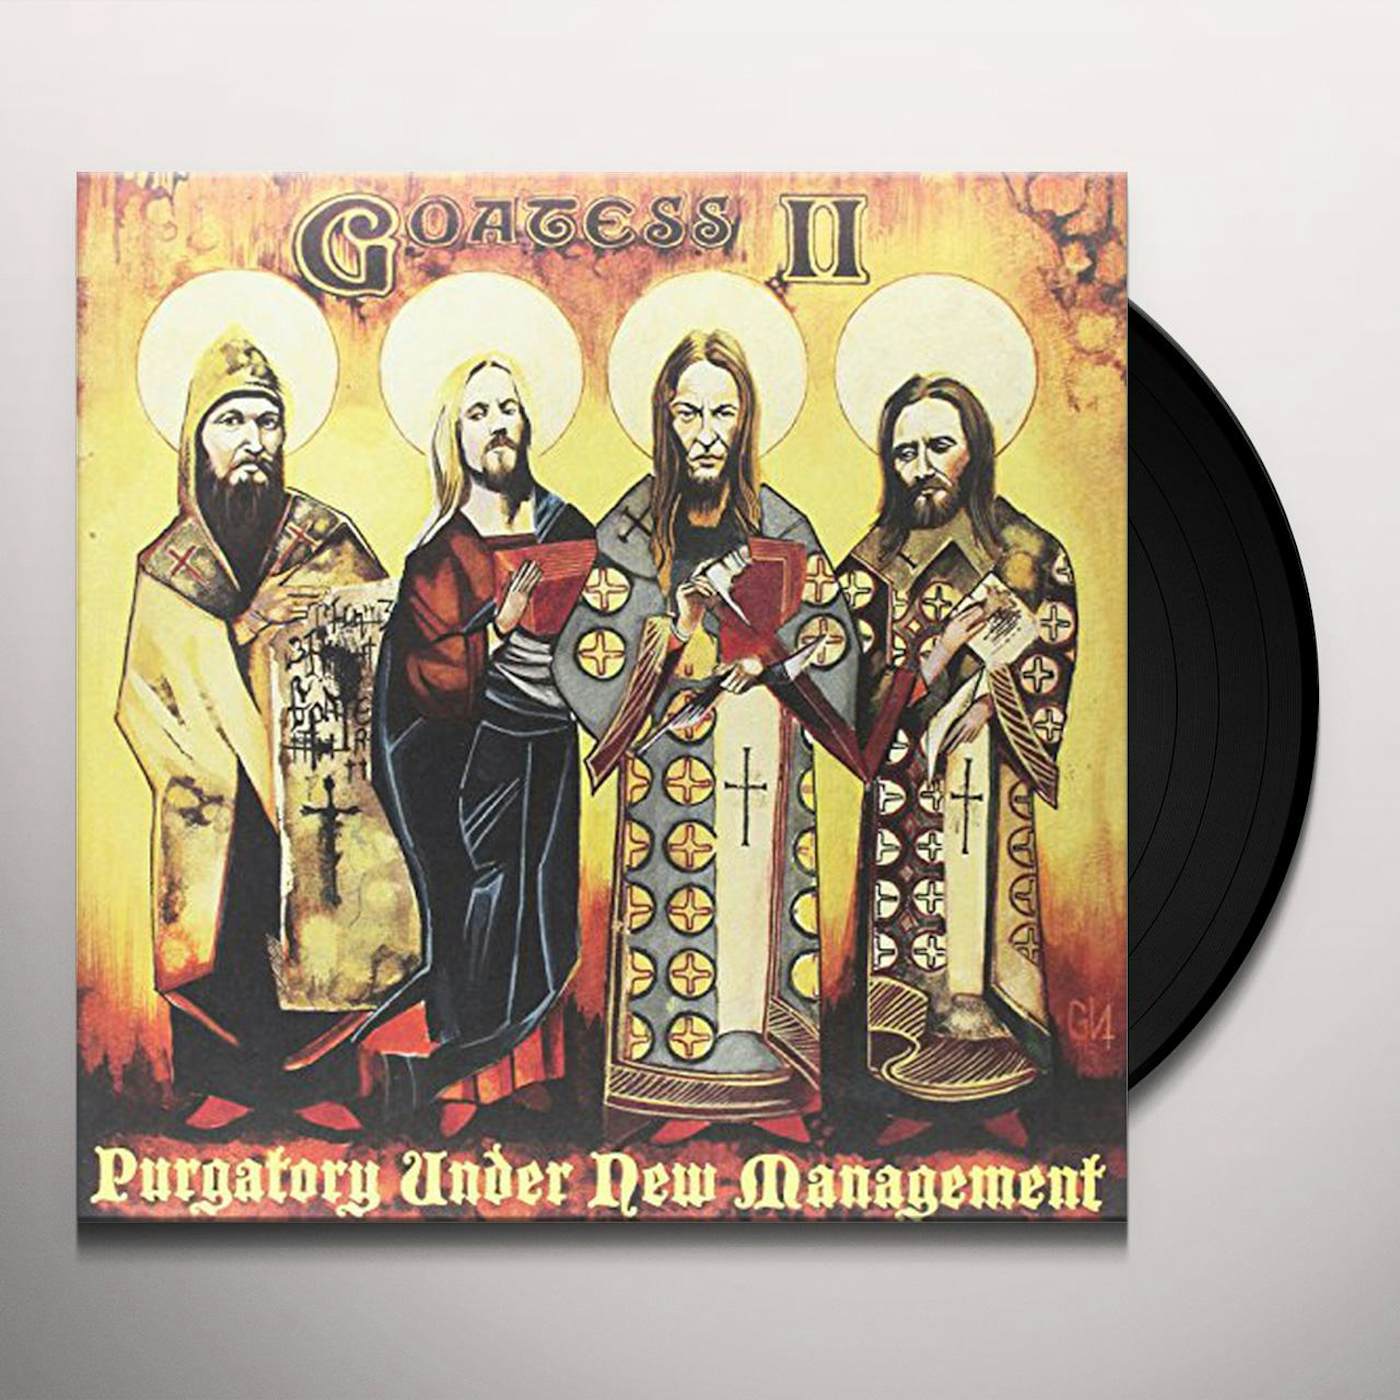 Goatess Purgatory Under New Management Vinyl Record